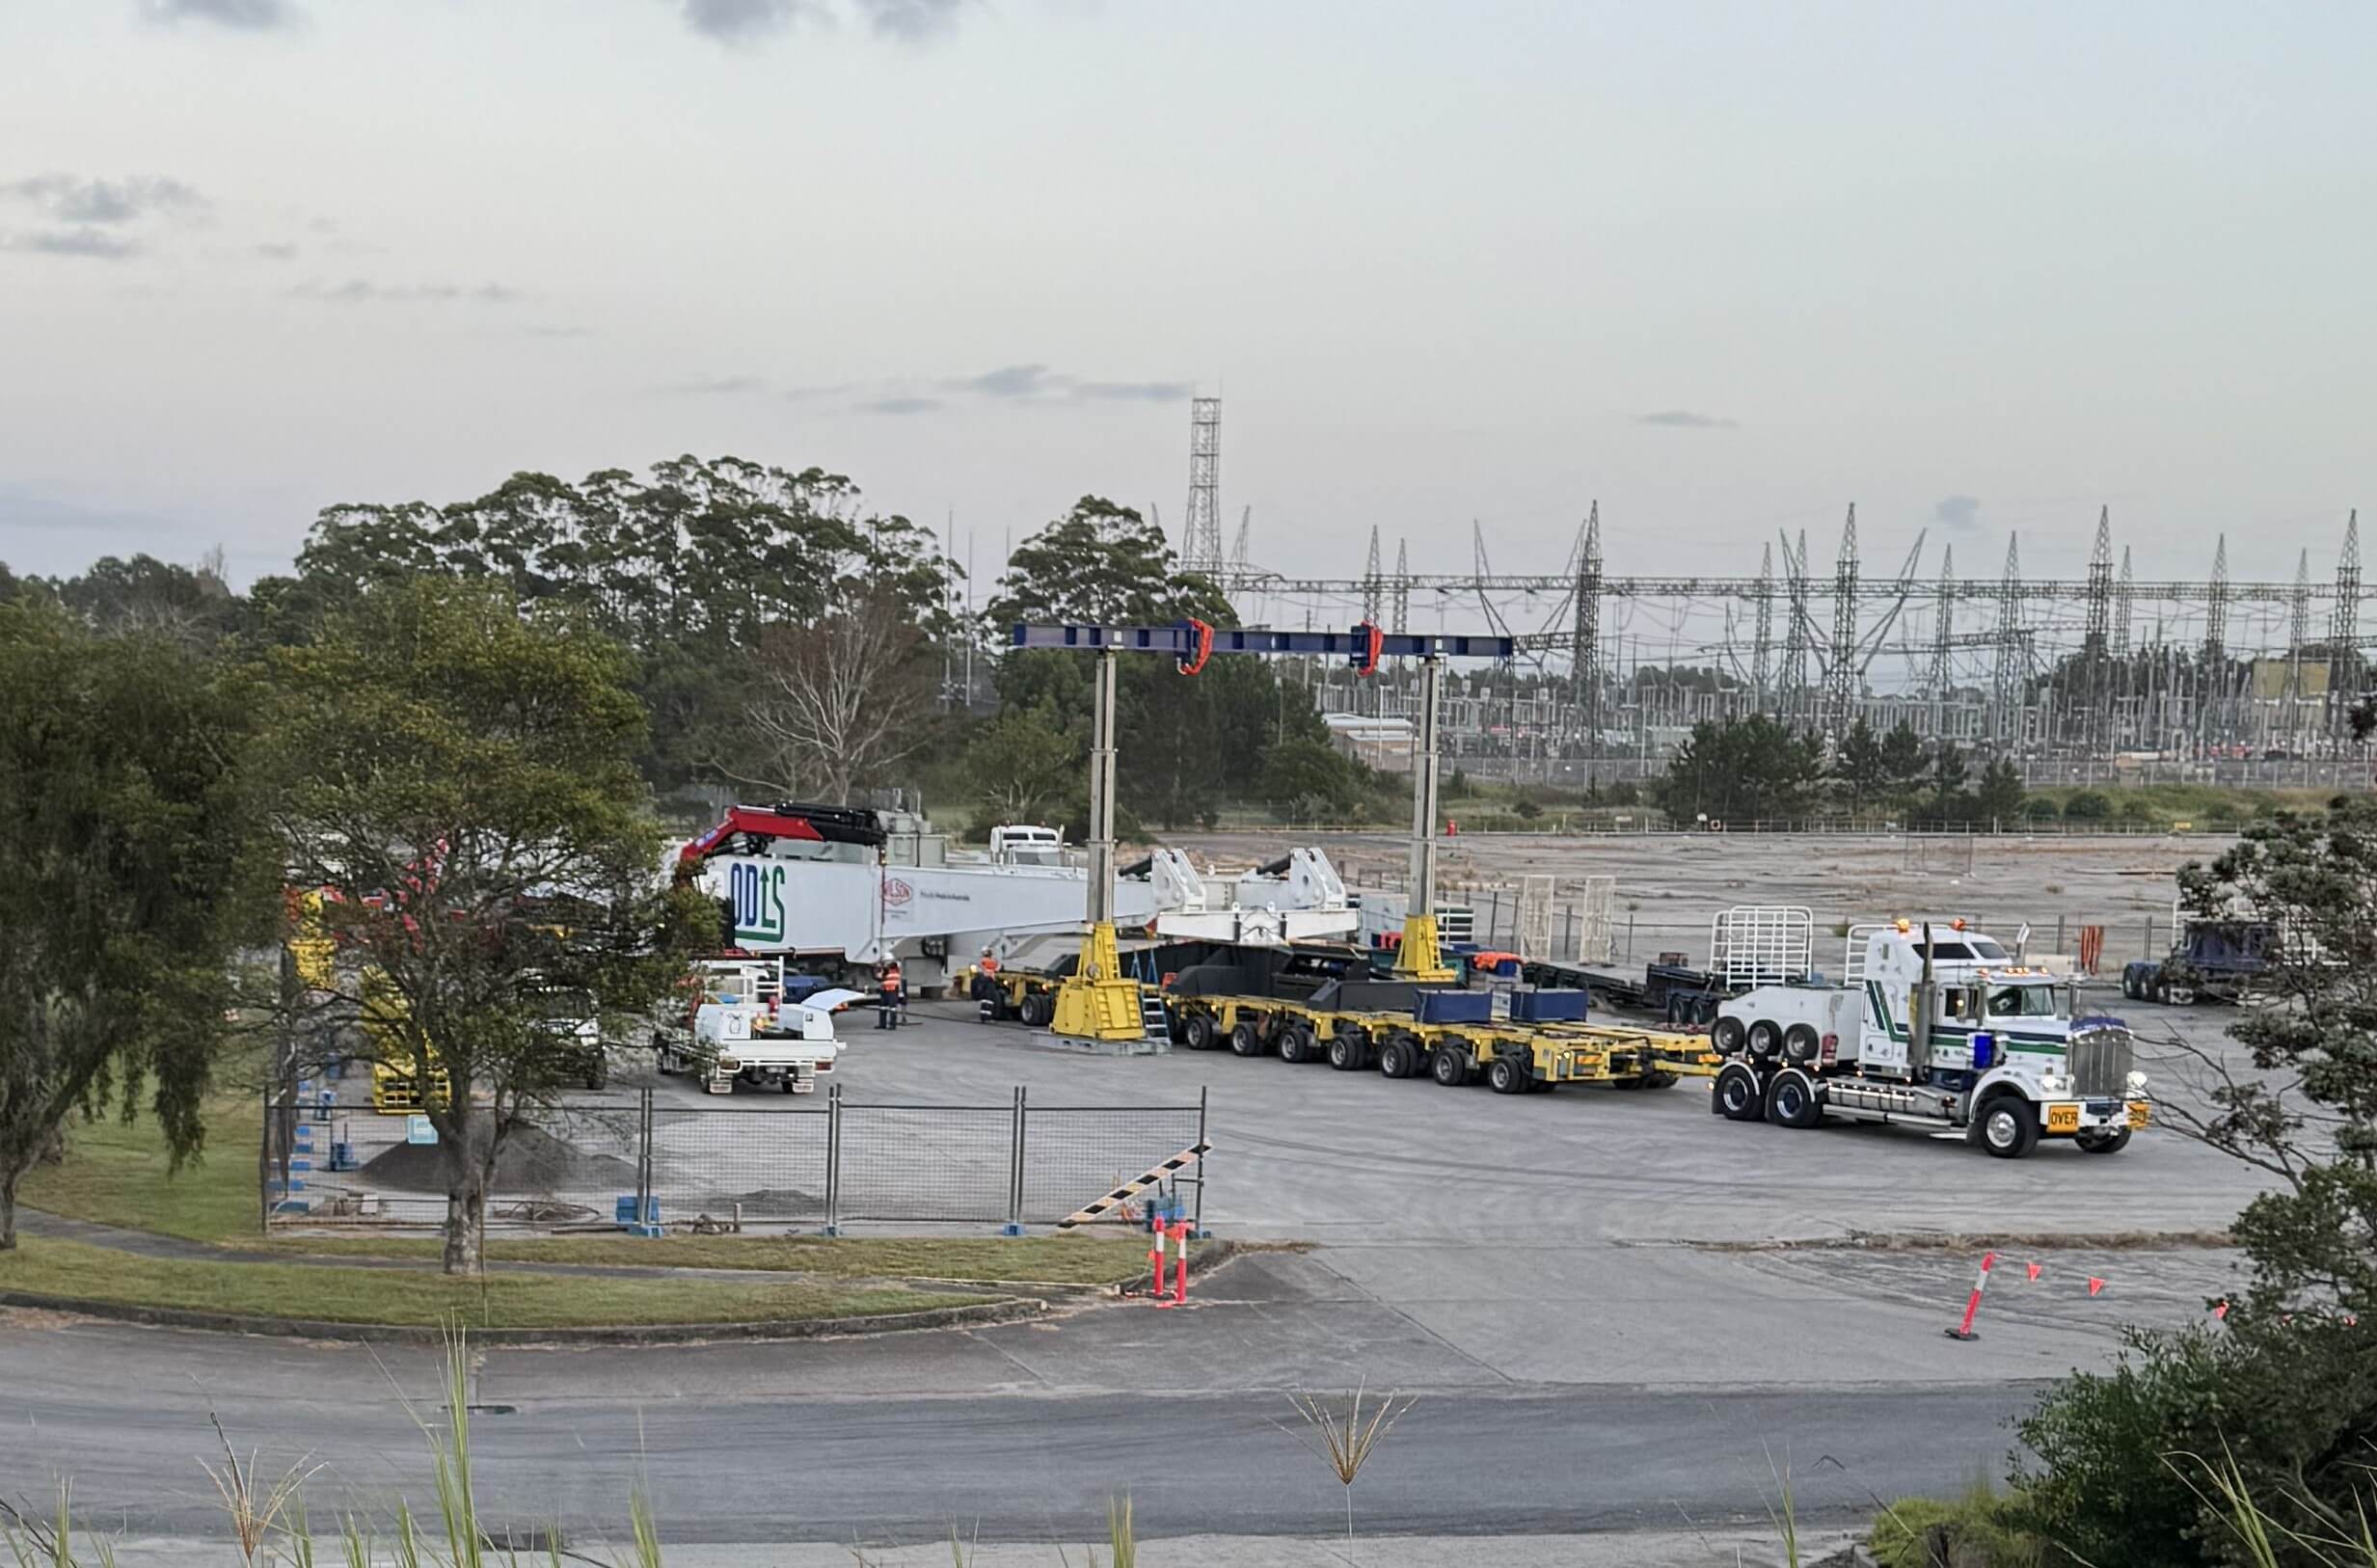 Second high-voltage transformer arrives at the Waratah Super Battery site